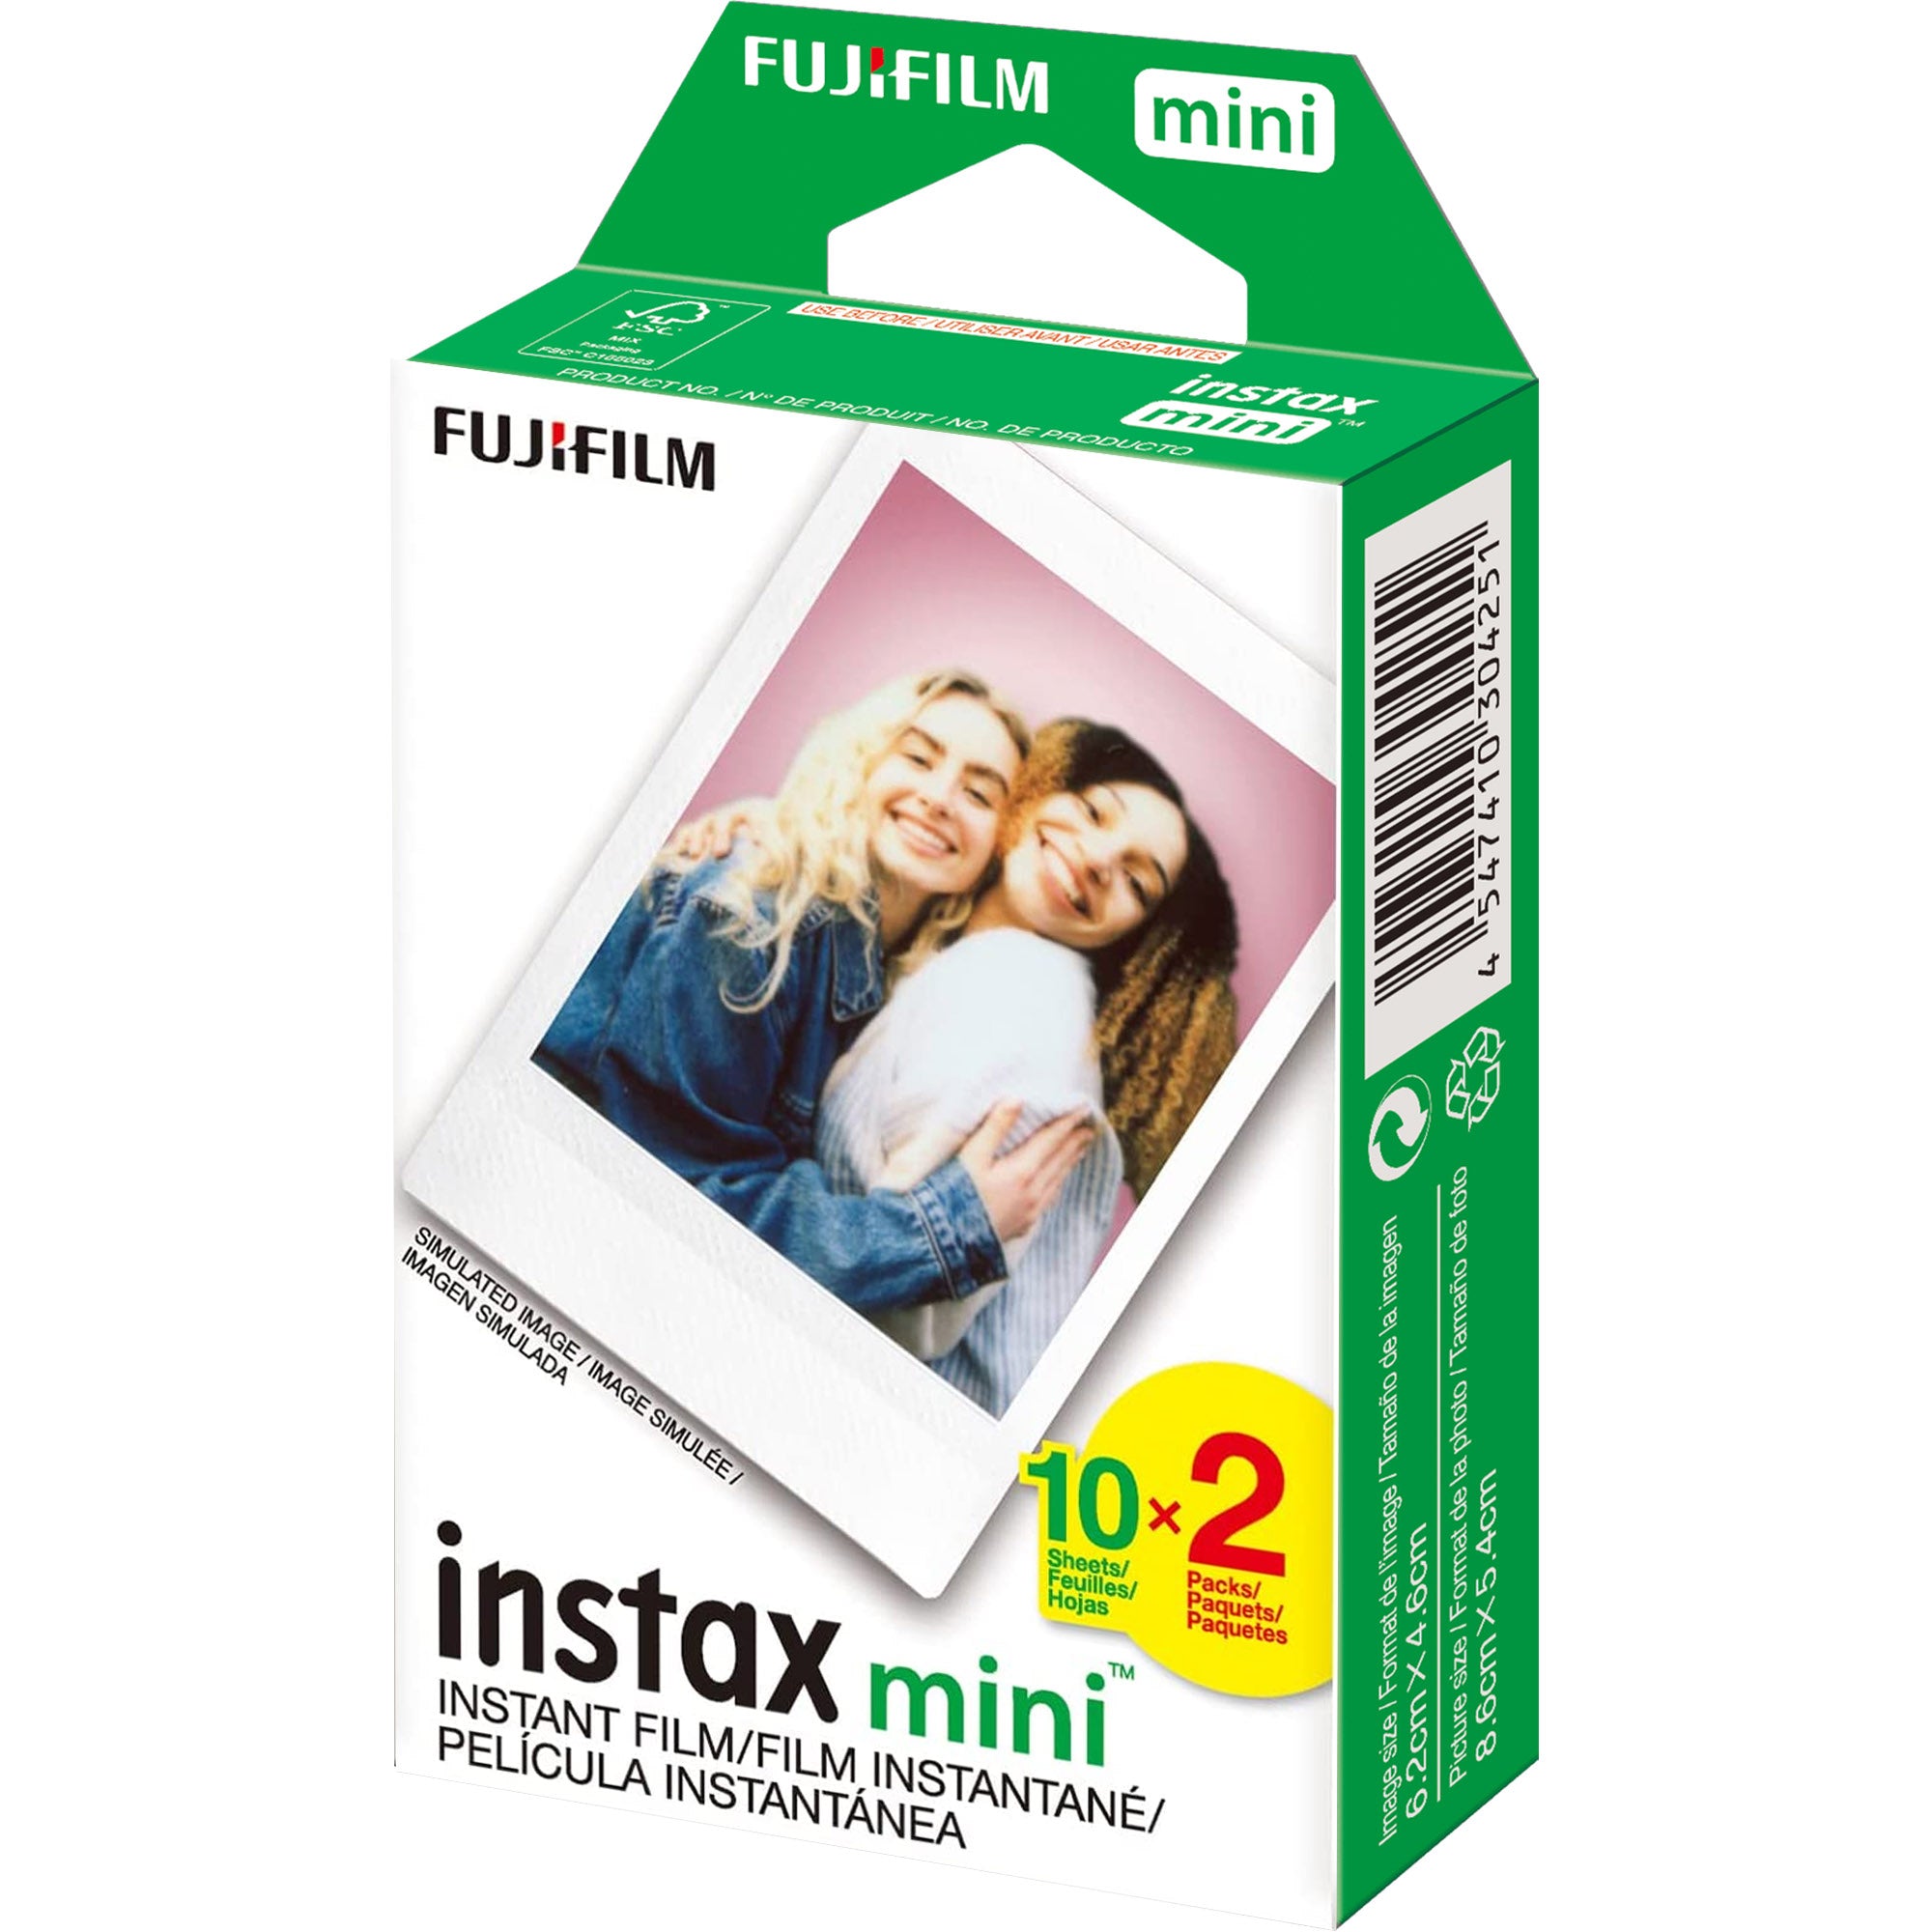 Fujifilm Instax Mini Instant Film for Fuji 7s 8 9 11 25 70 SP-1 SP-2 (100 Films)